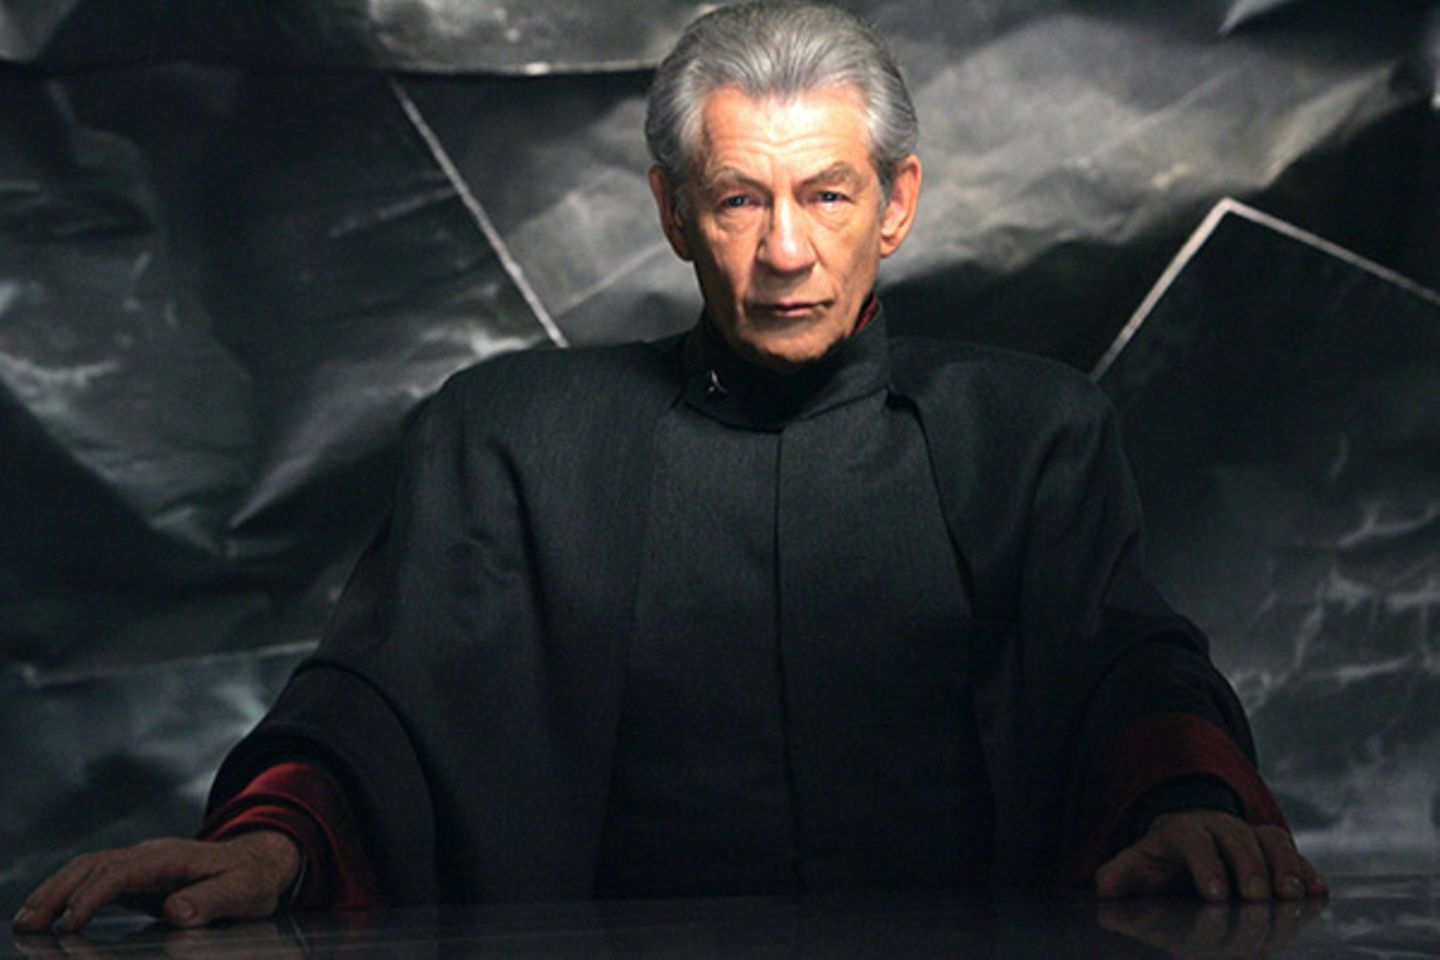 2006 zeigt Ian McKellen als Magneto in "X-Men 3" seine Anziehungskraft.